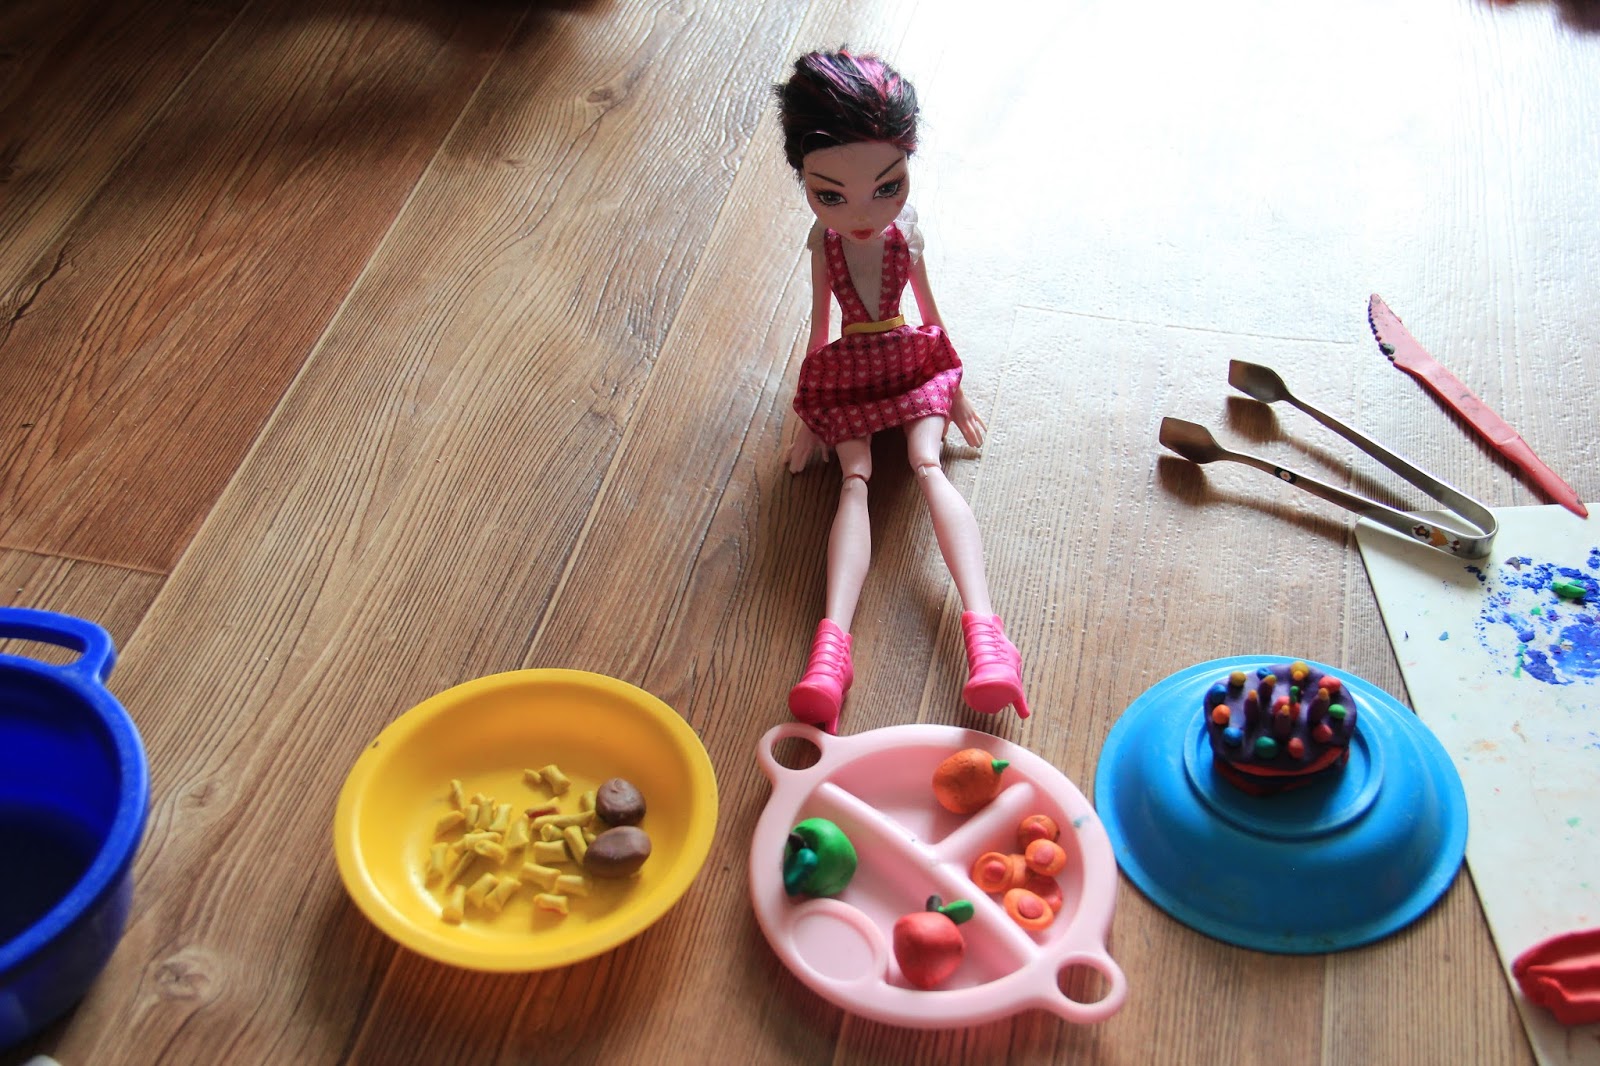 Пластилин для барби. Еда из пластилина для кукол. Предметы изпластелина для кукол. Еда для Барби из пластилина. Вещи для кукол из пластилина.